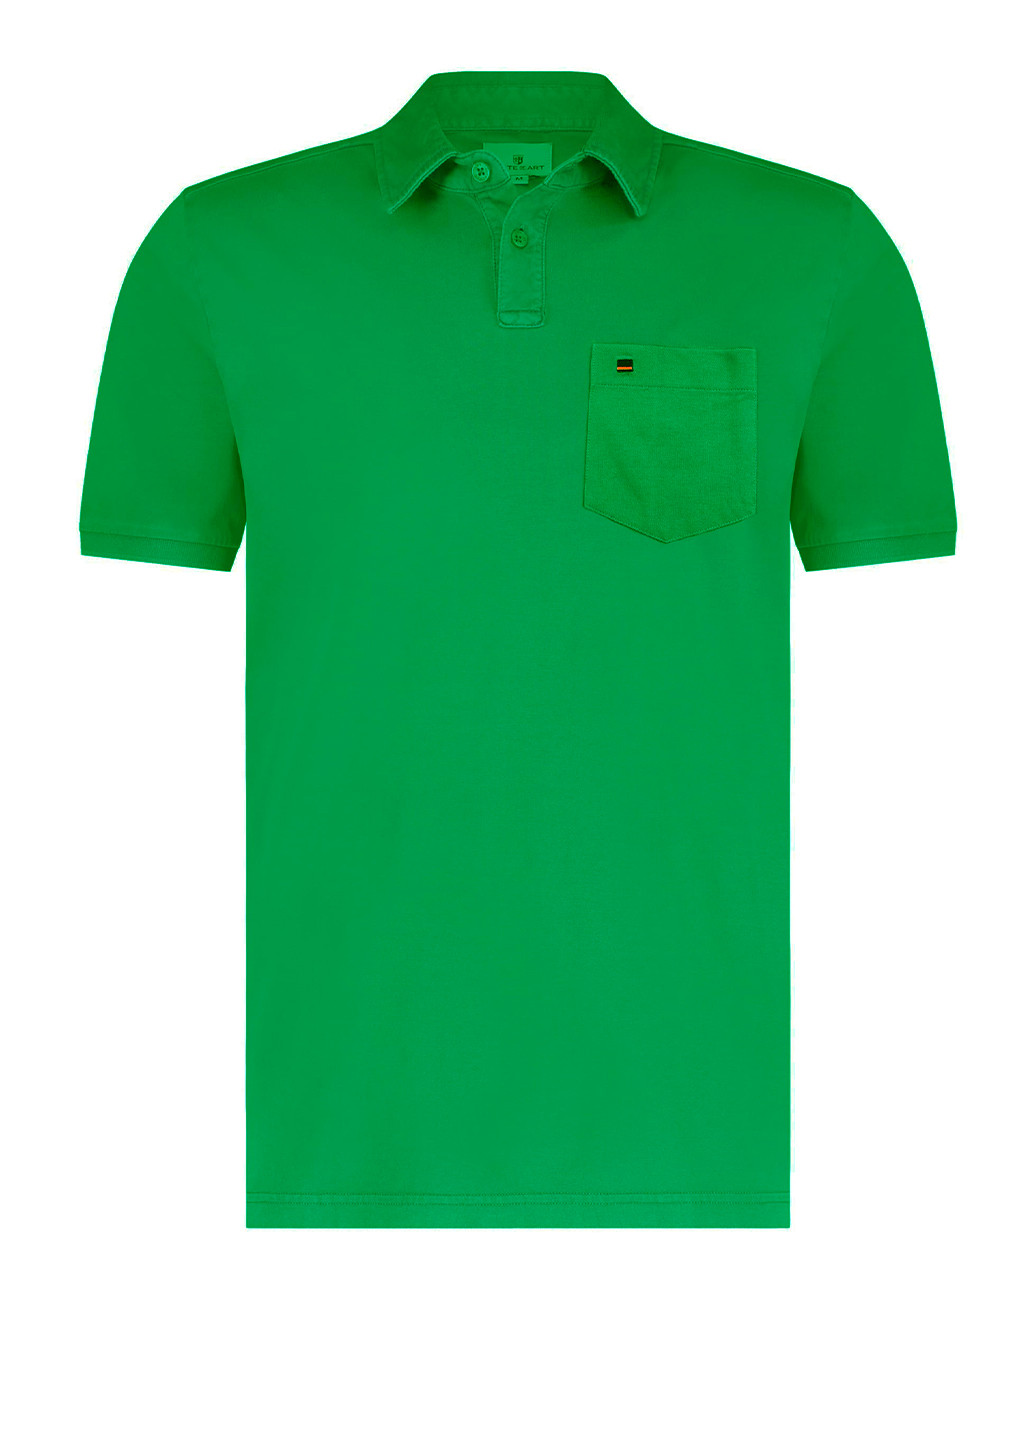 Зеленая футболка-мужская футболка-поло для мужчин State of Art однотонная